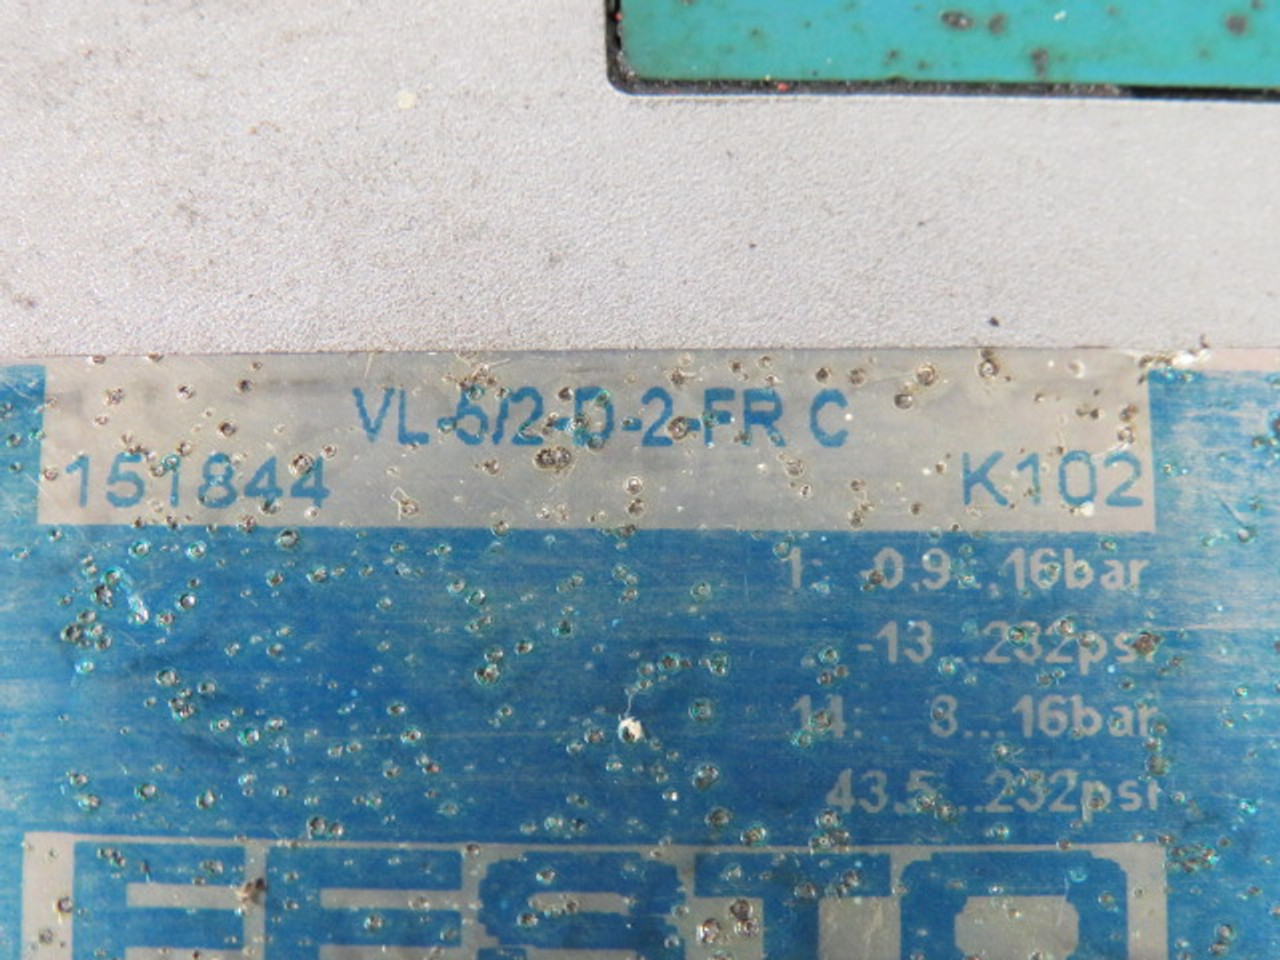 Festo VL-5/2-D-2-FR-C Pneumatic Valve 0.9-16Bar 13-232PSI  USED